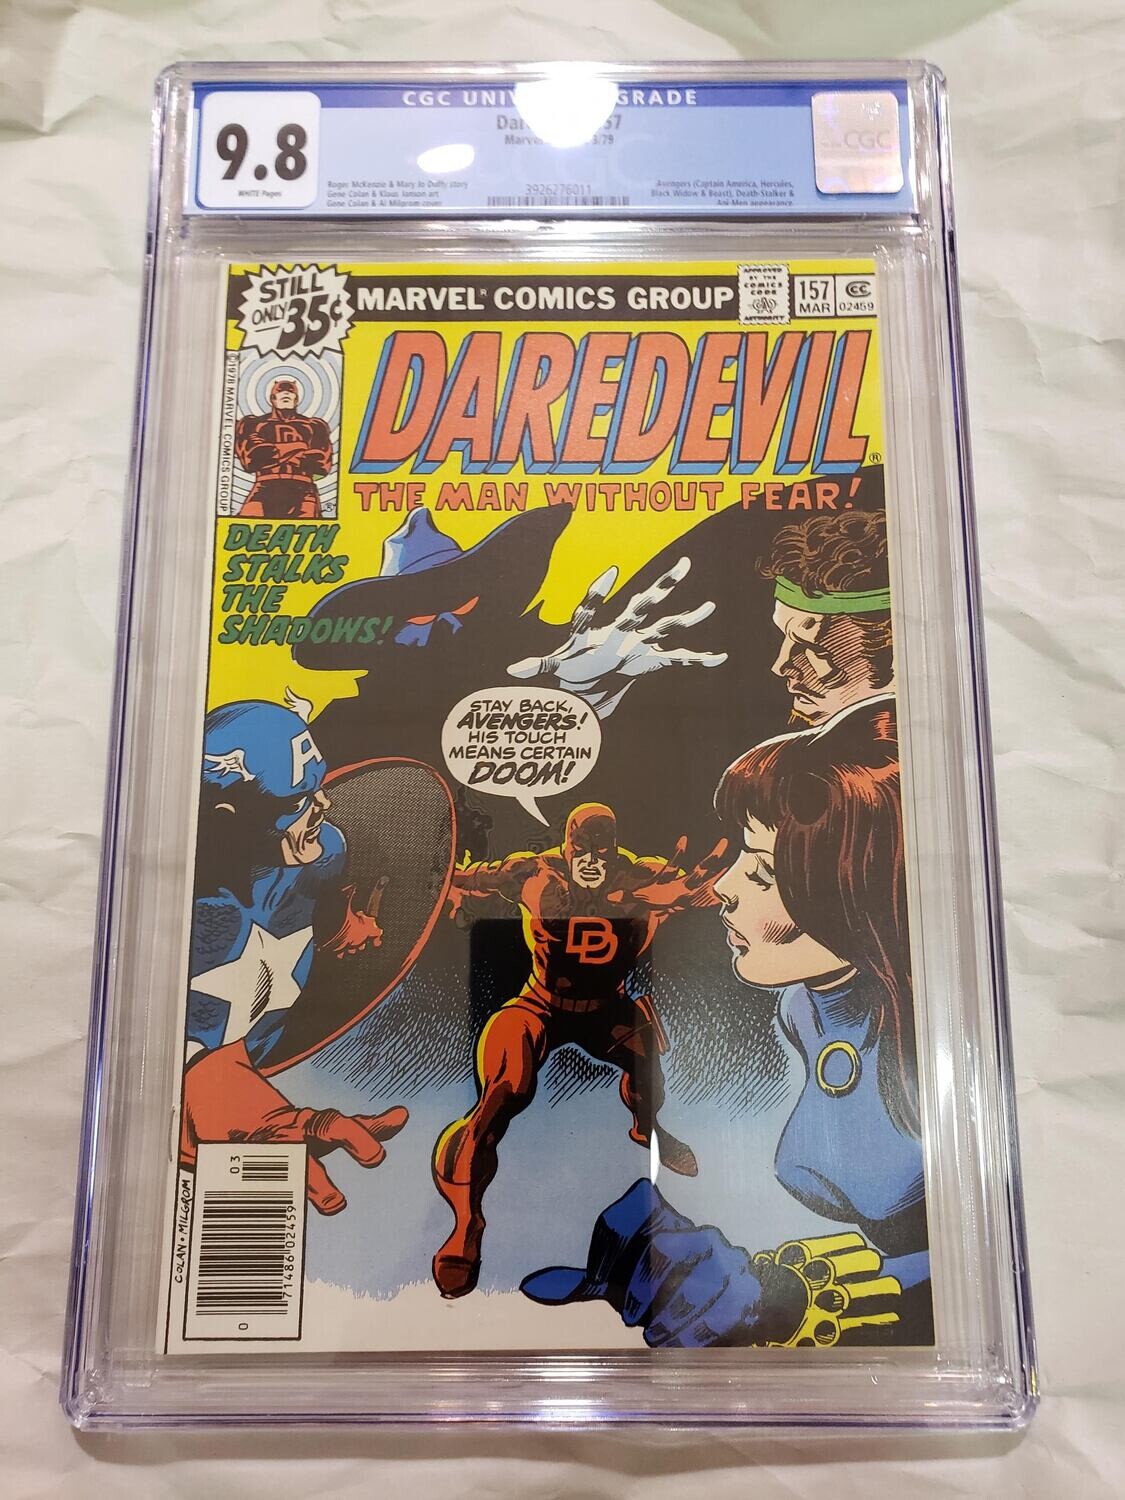 Daredevil #157 CGC 9.8